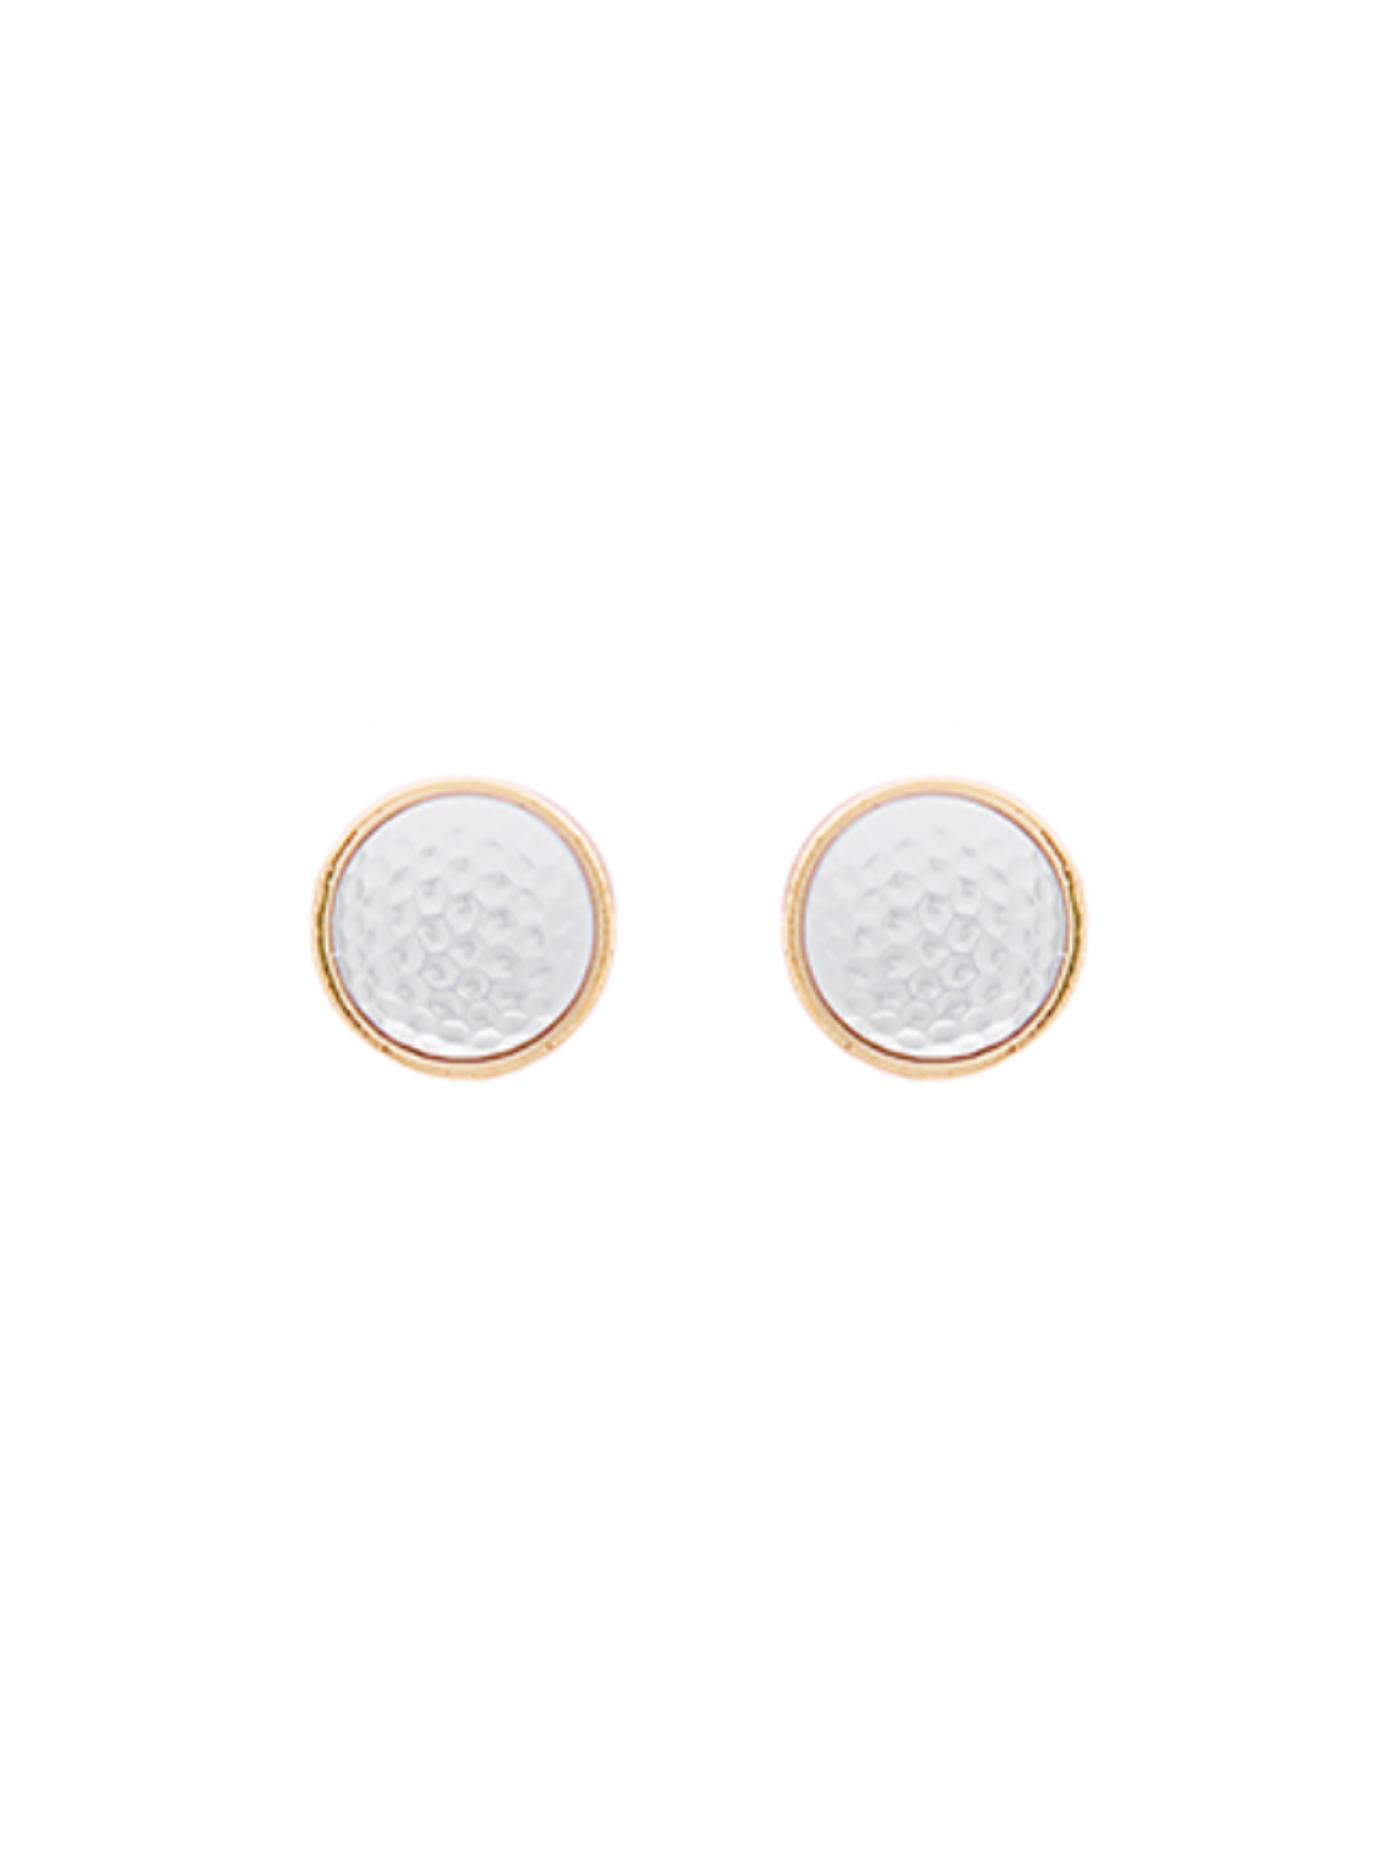 Golf Stud Earrings on white background.